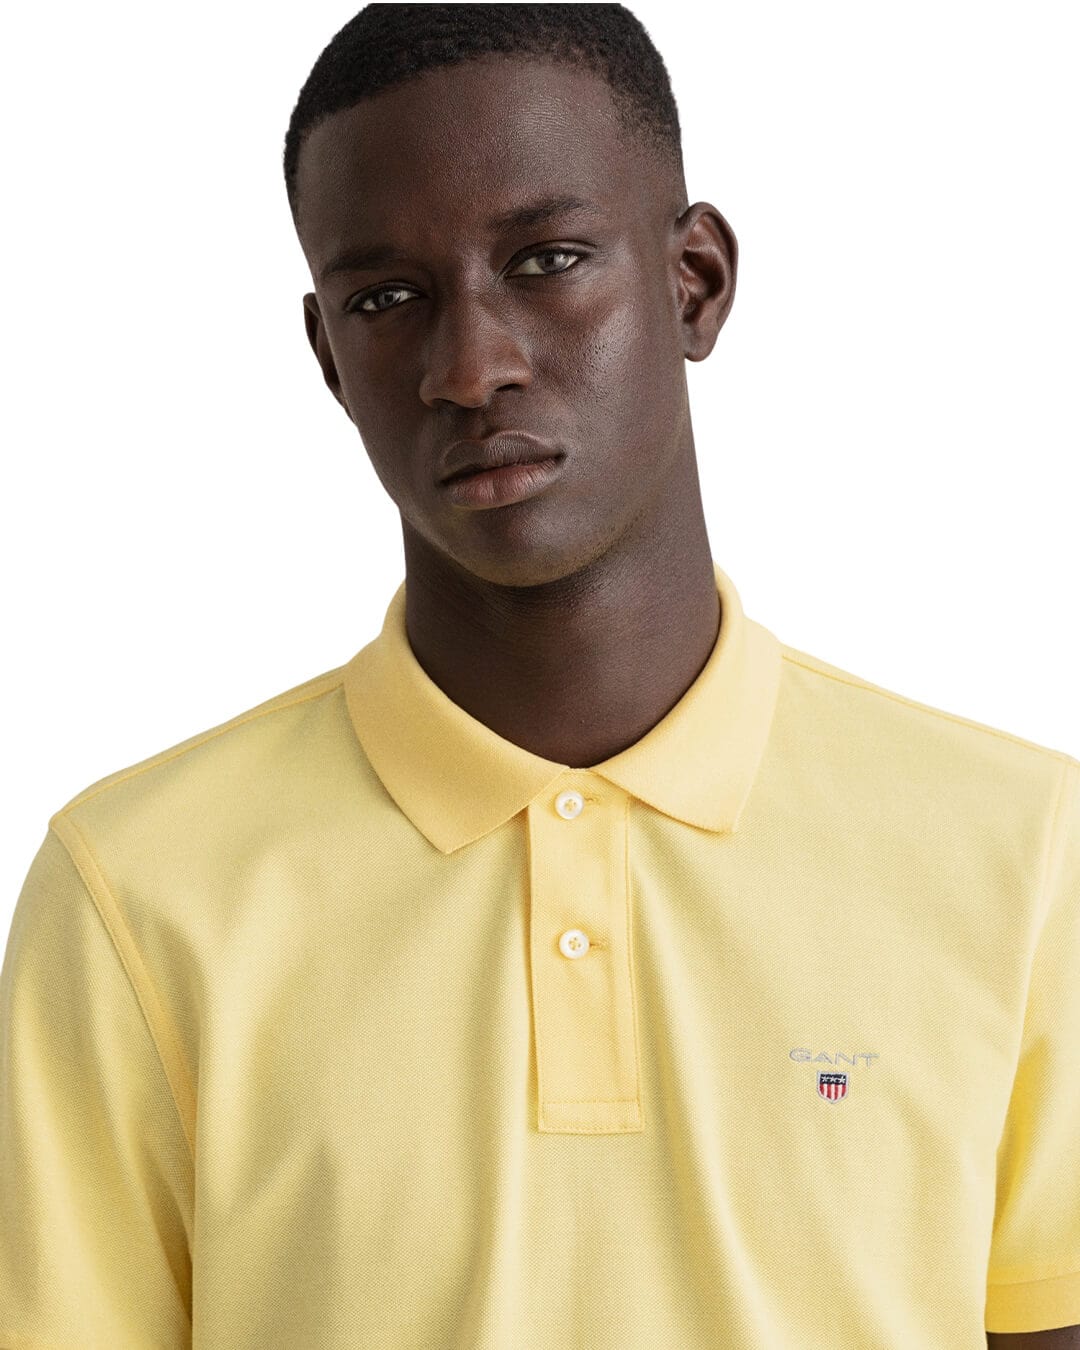 Gant Polo Shirts Gant Original Pique Yellow Polo Shirt